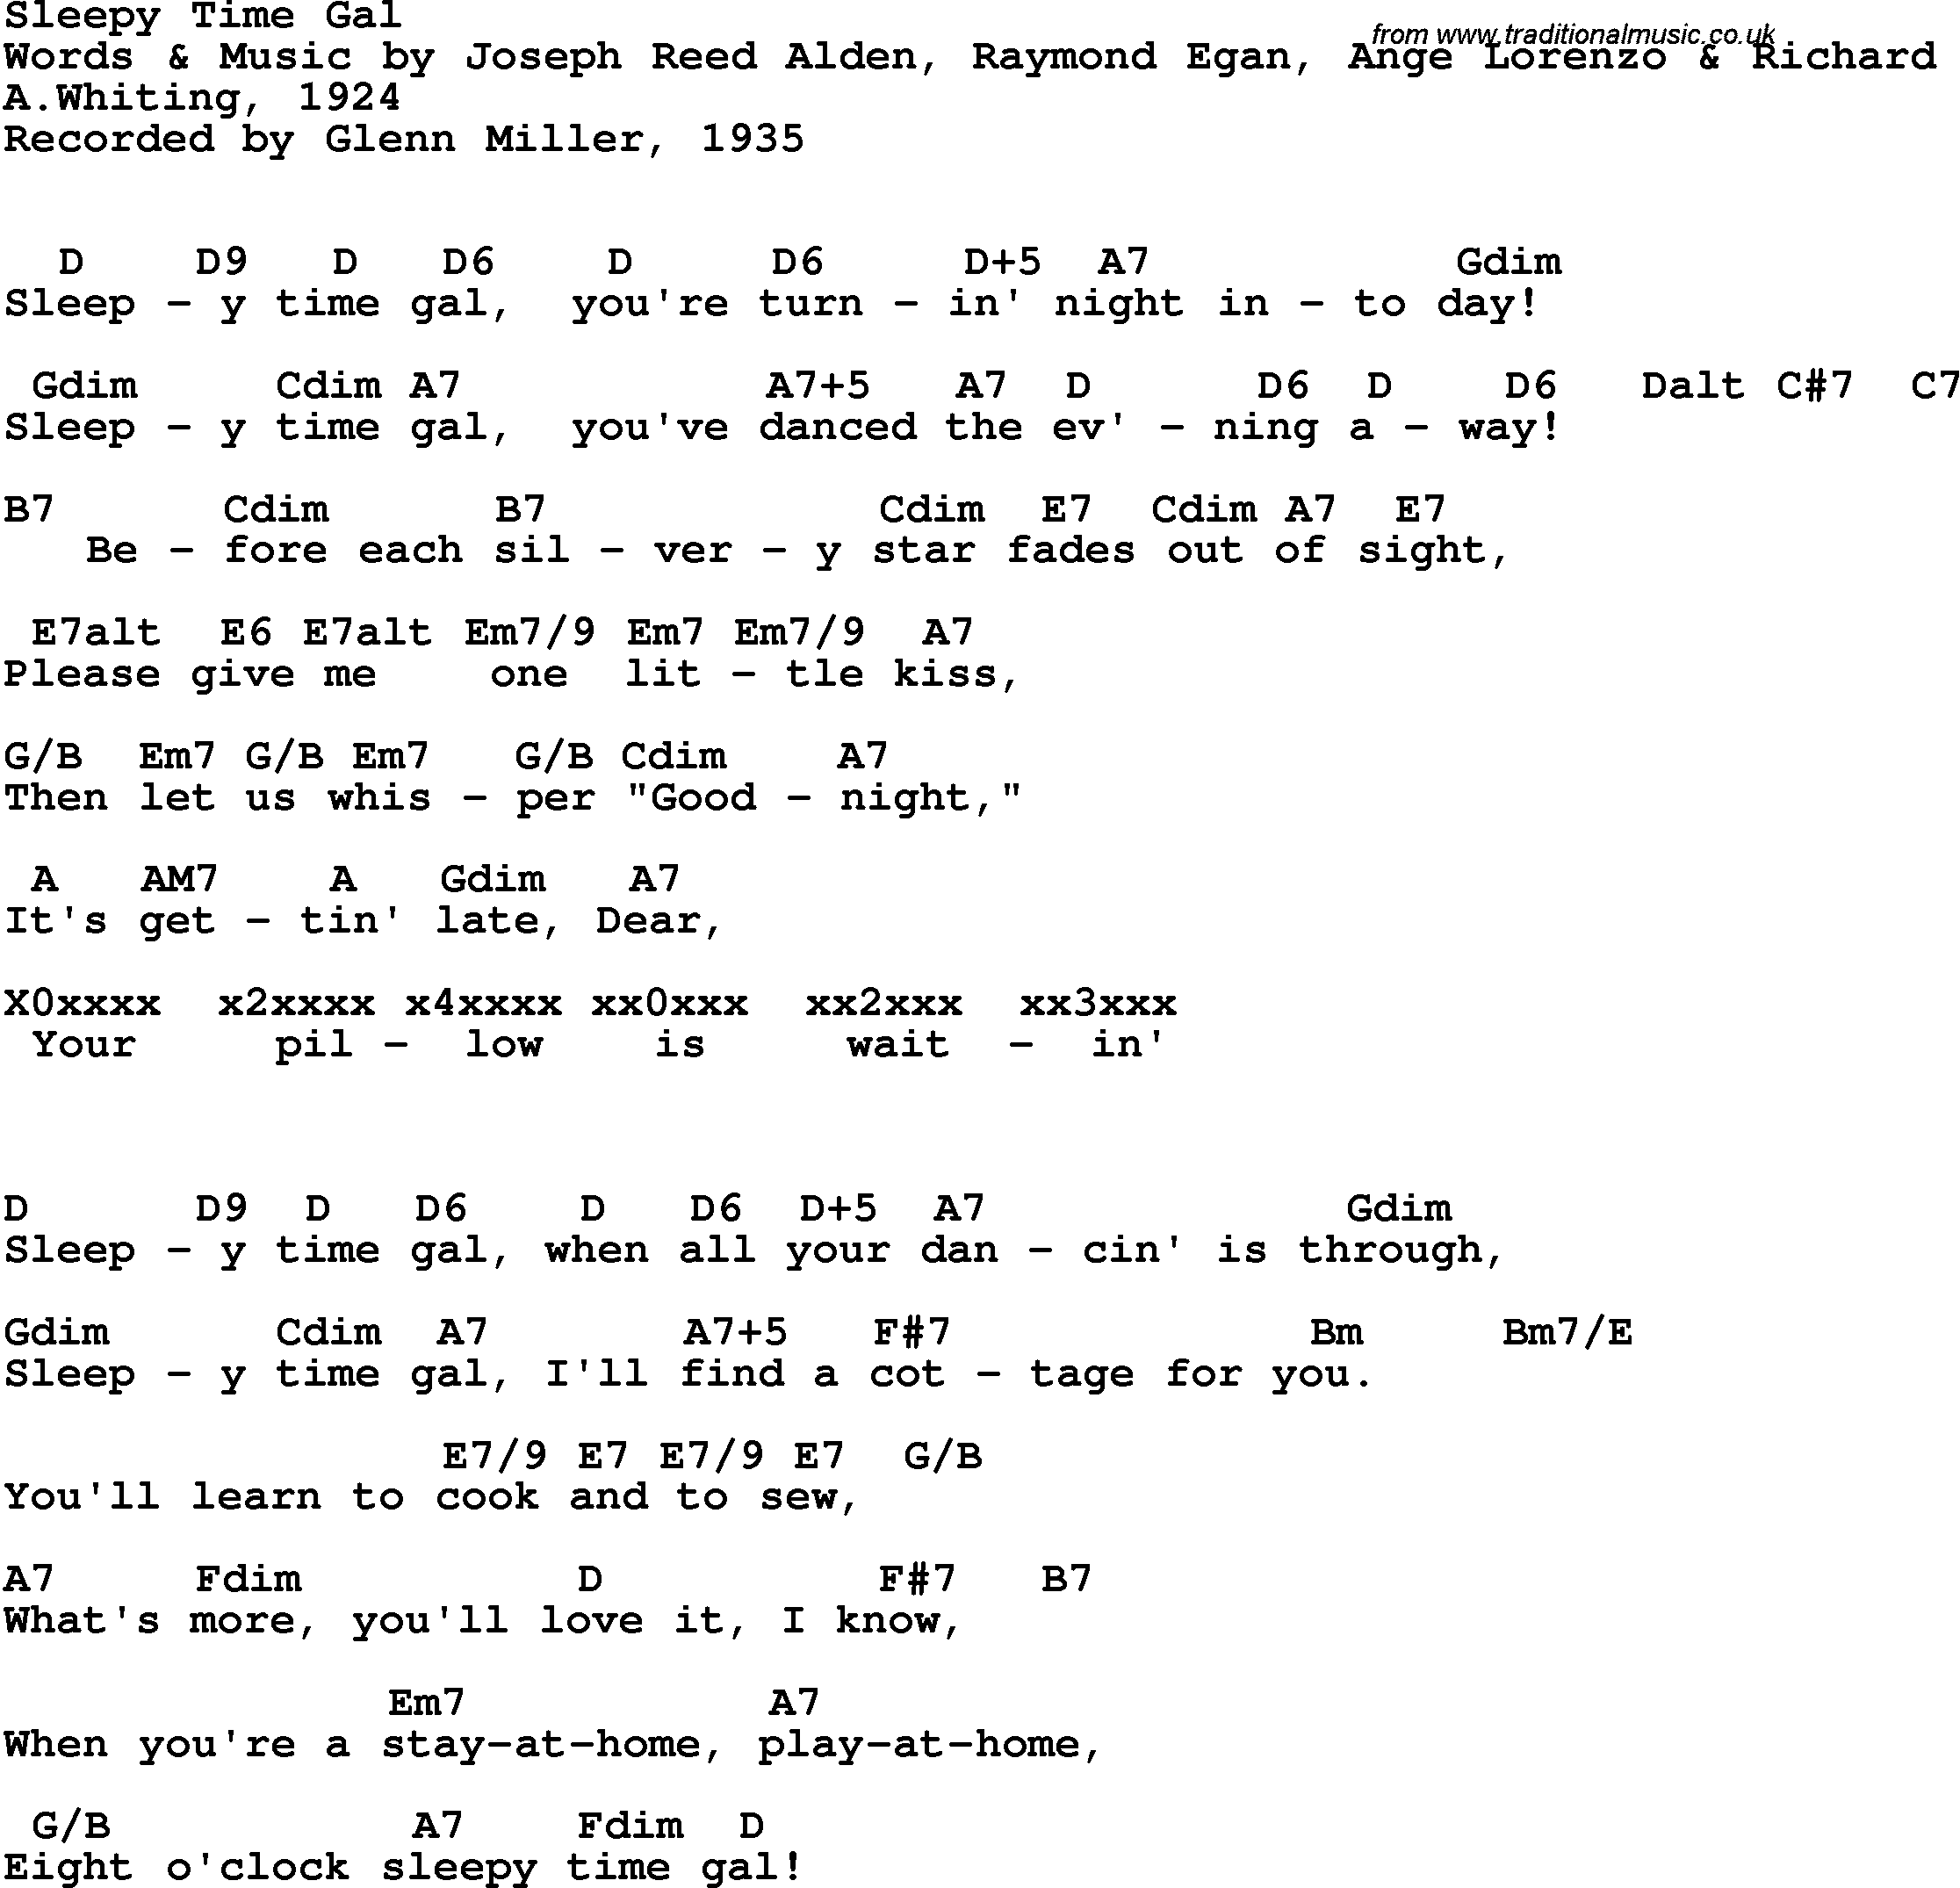 Song Lyrics with guitar chords for Sleepy Time Gal - Glenn Miller, 1935